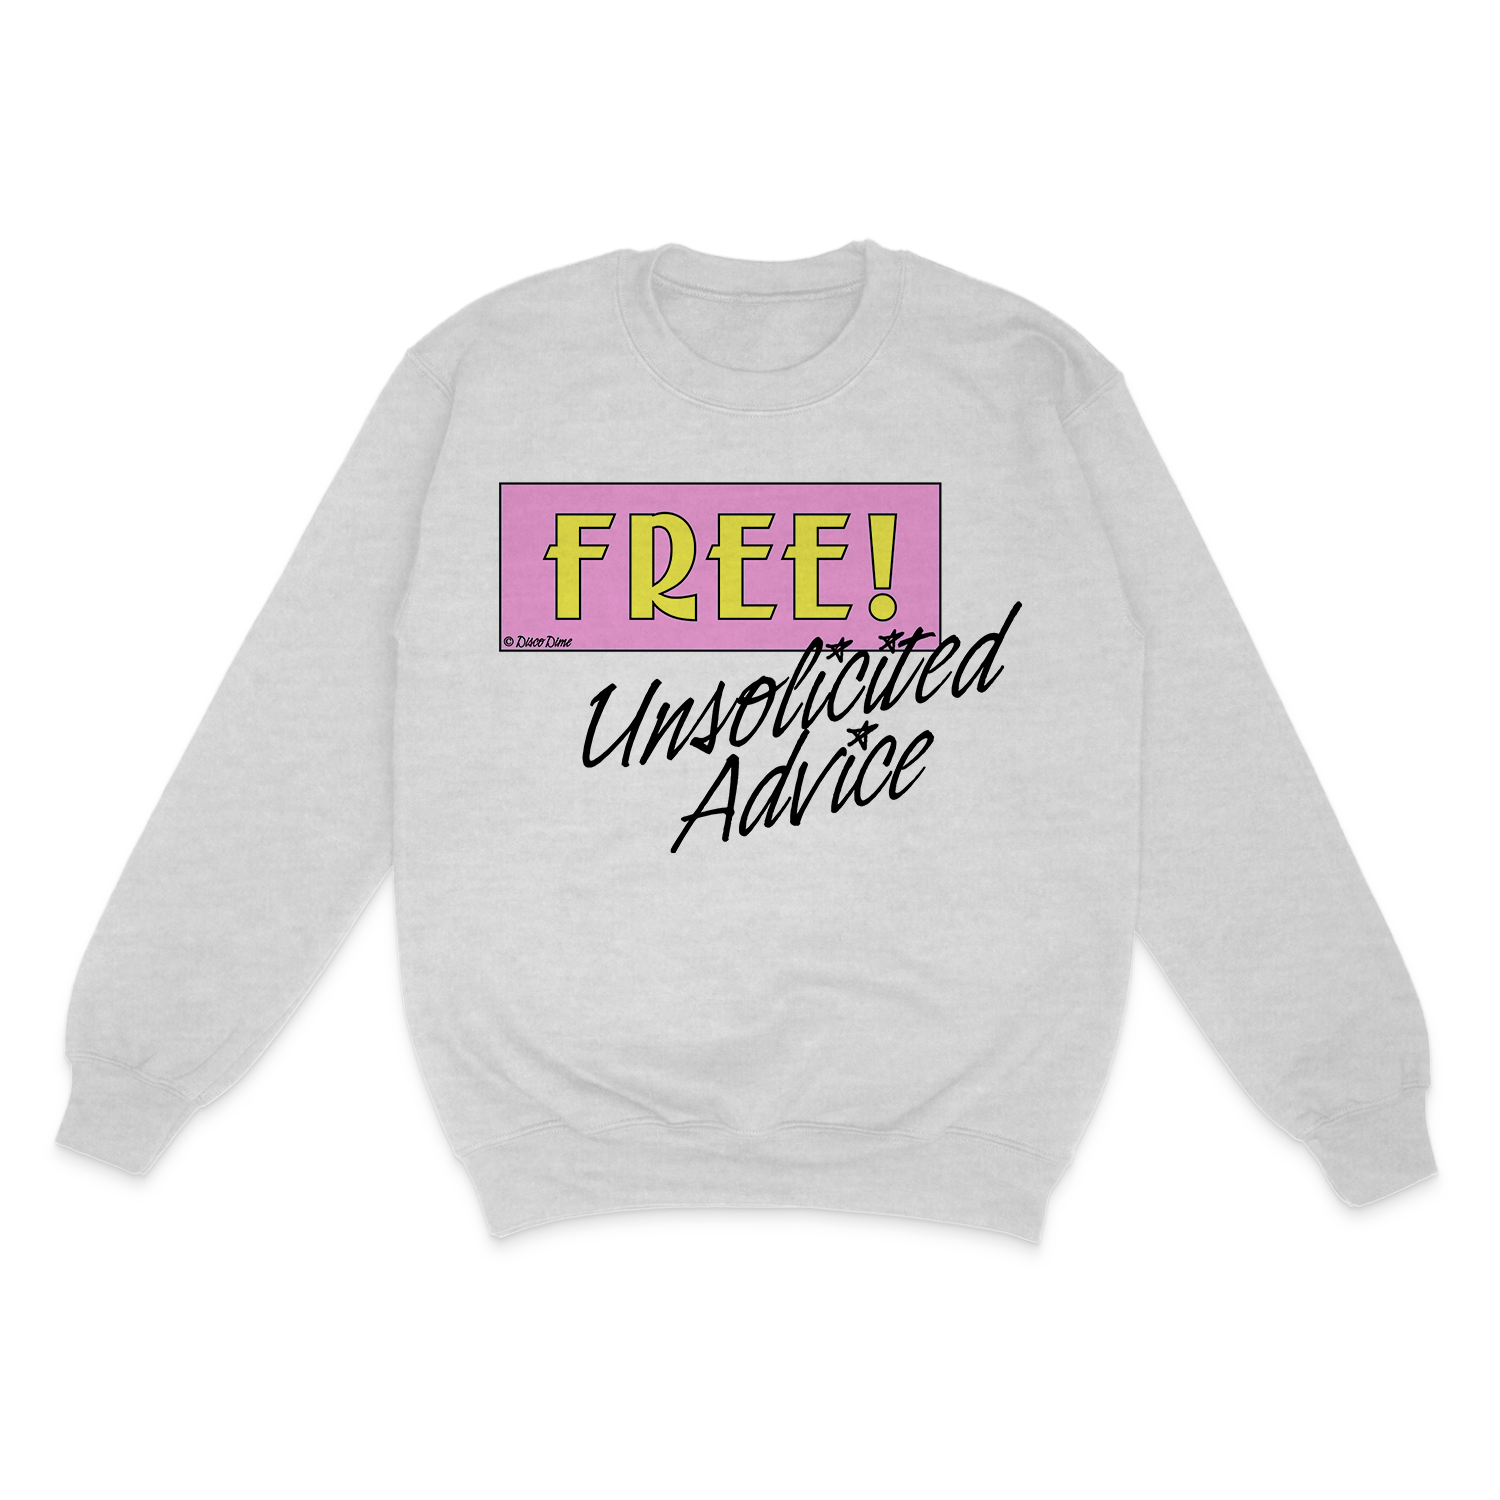 Free Unsolicited Advice Crewneck Sweatshirt